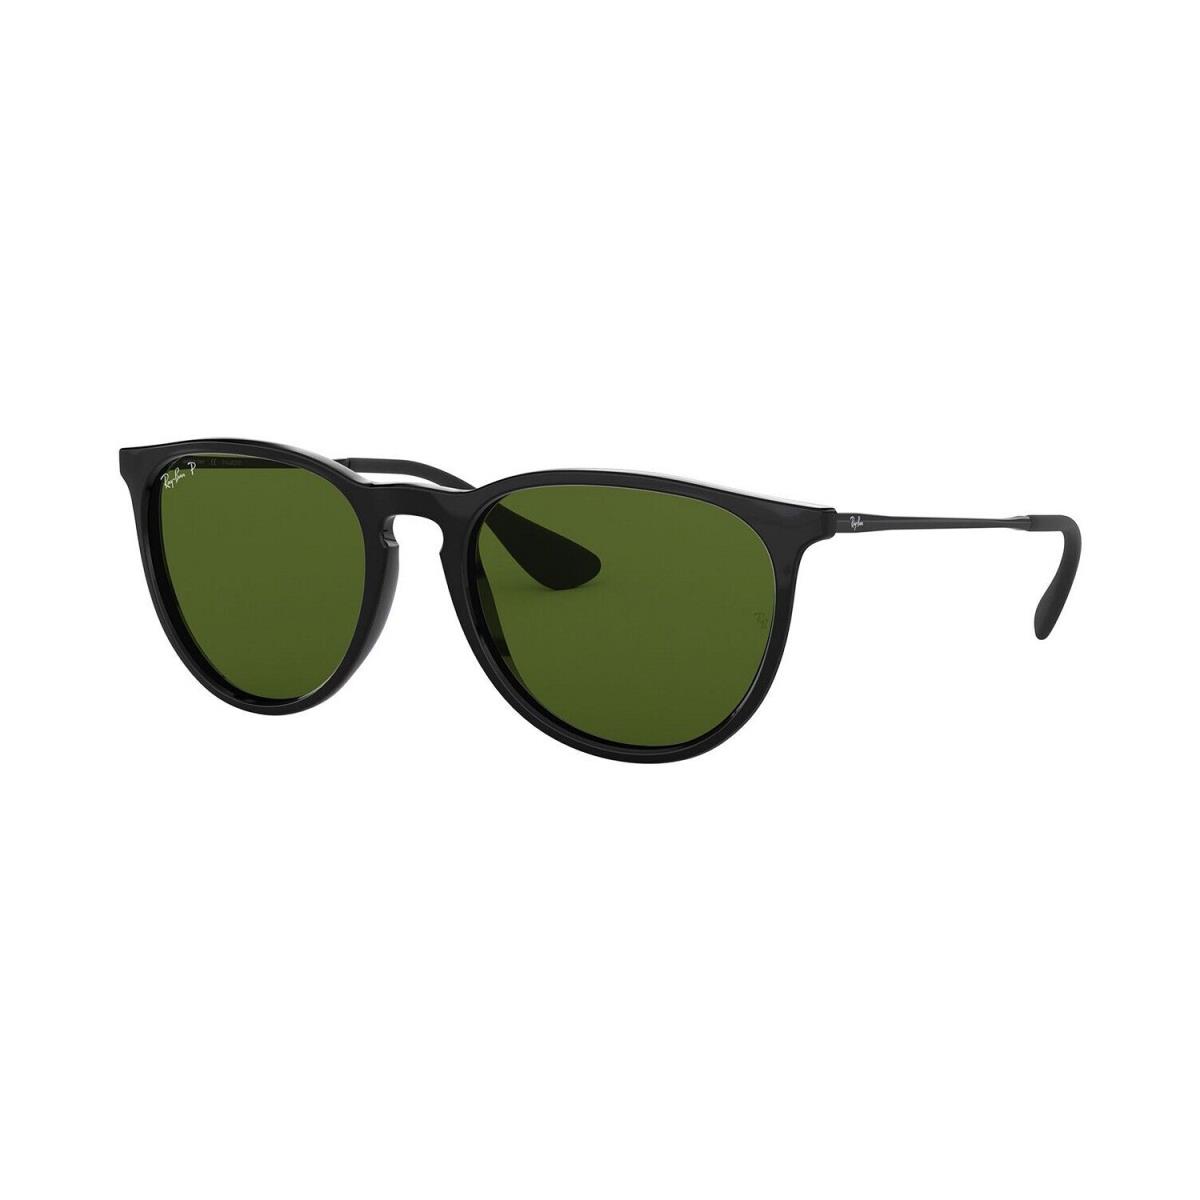 Ray-ban RB4171 601/2P Erika Fashion Polarized Sunglasses Black/green